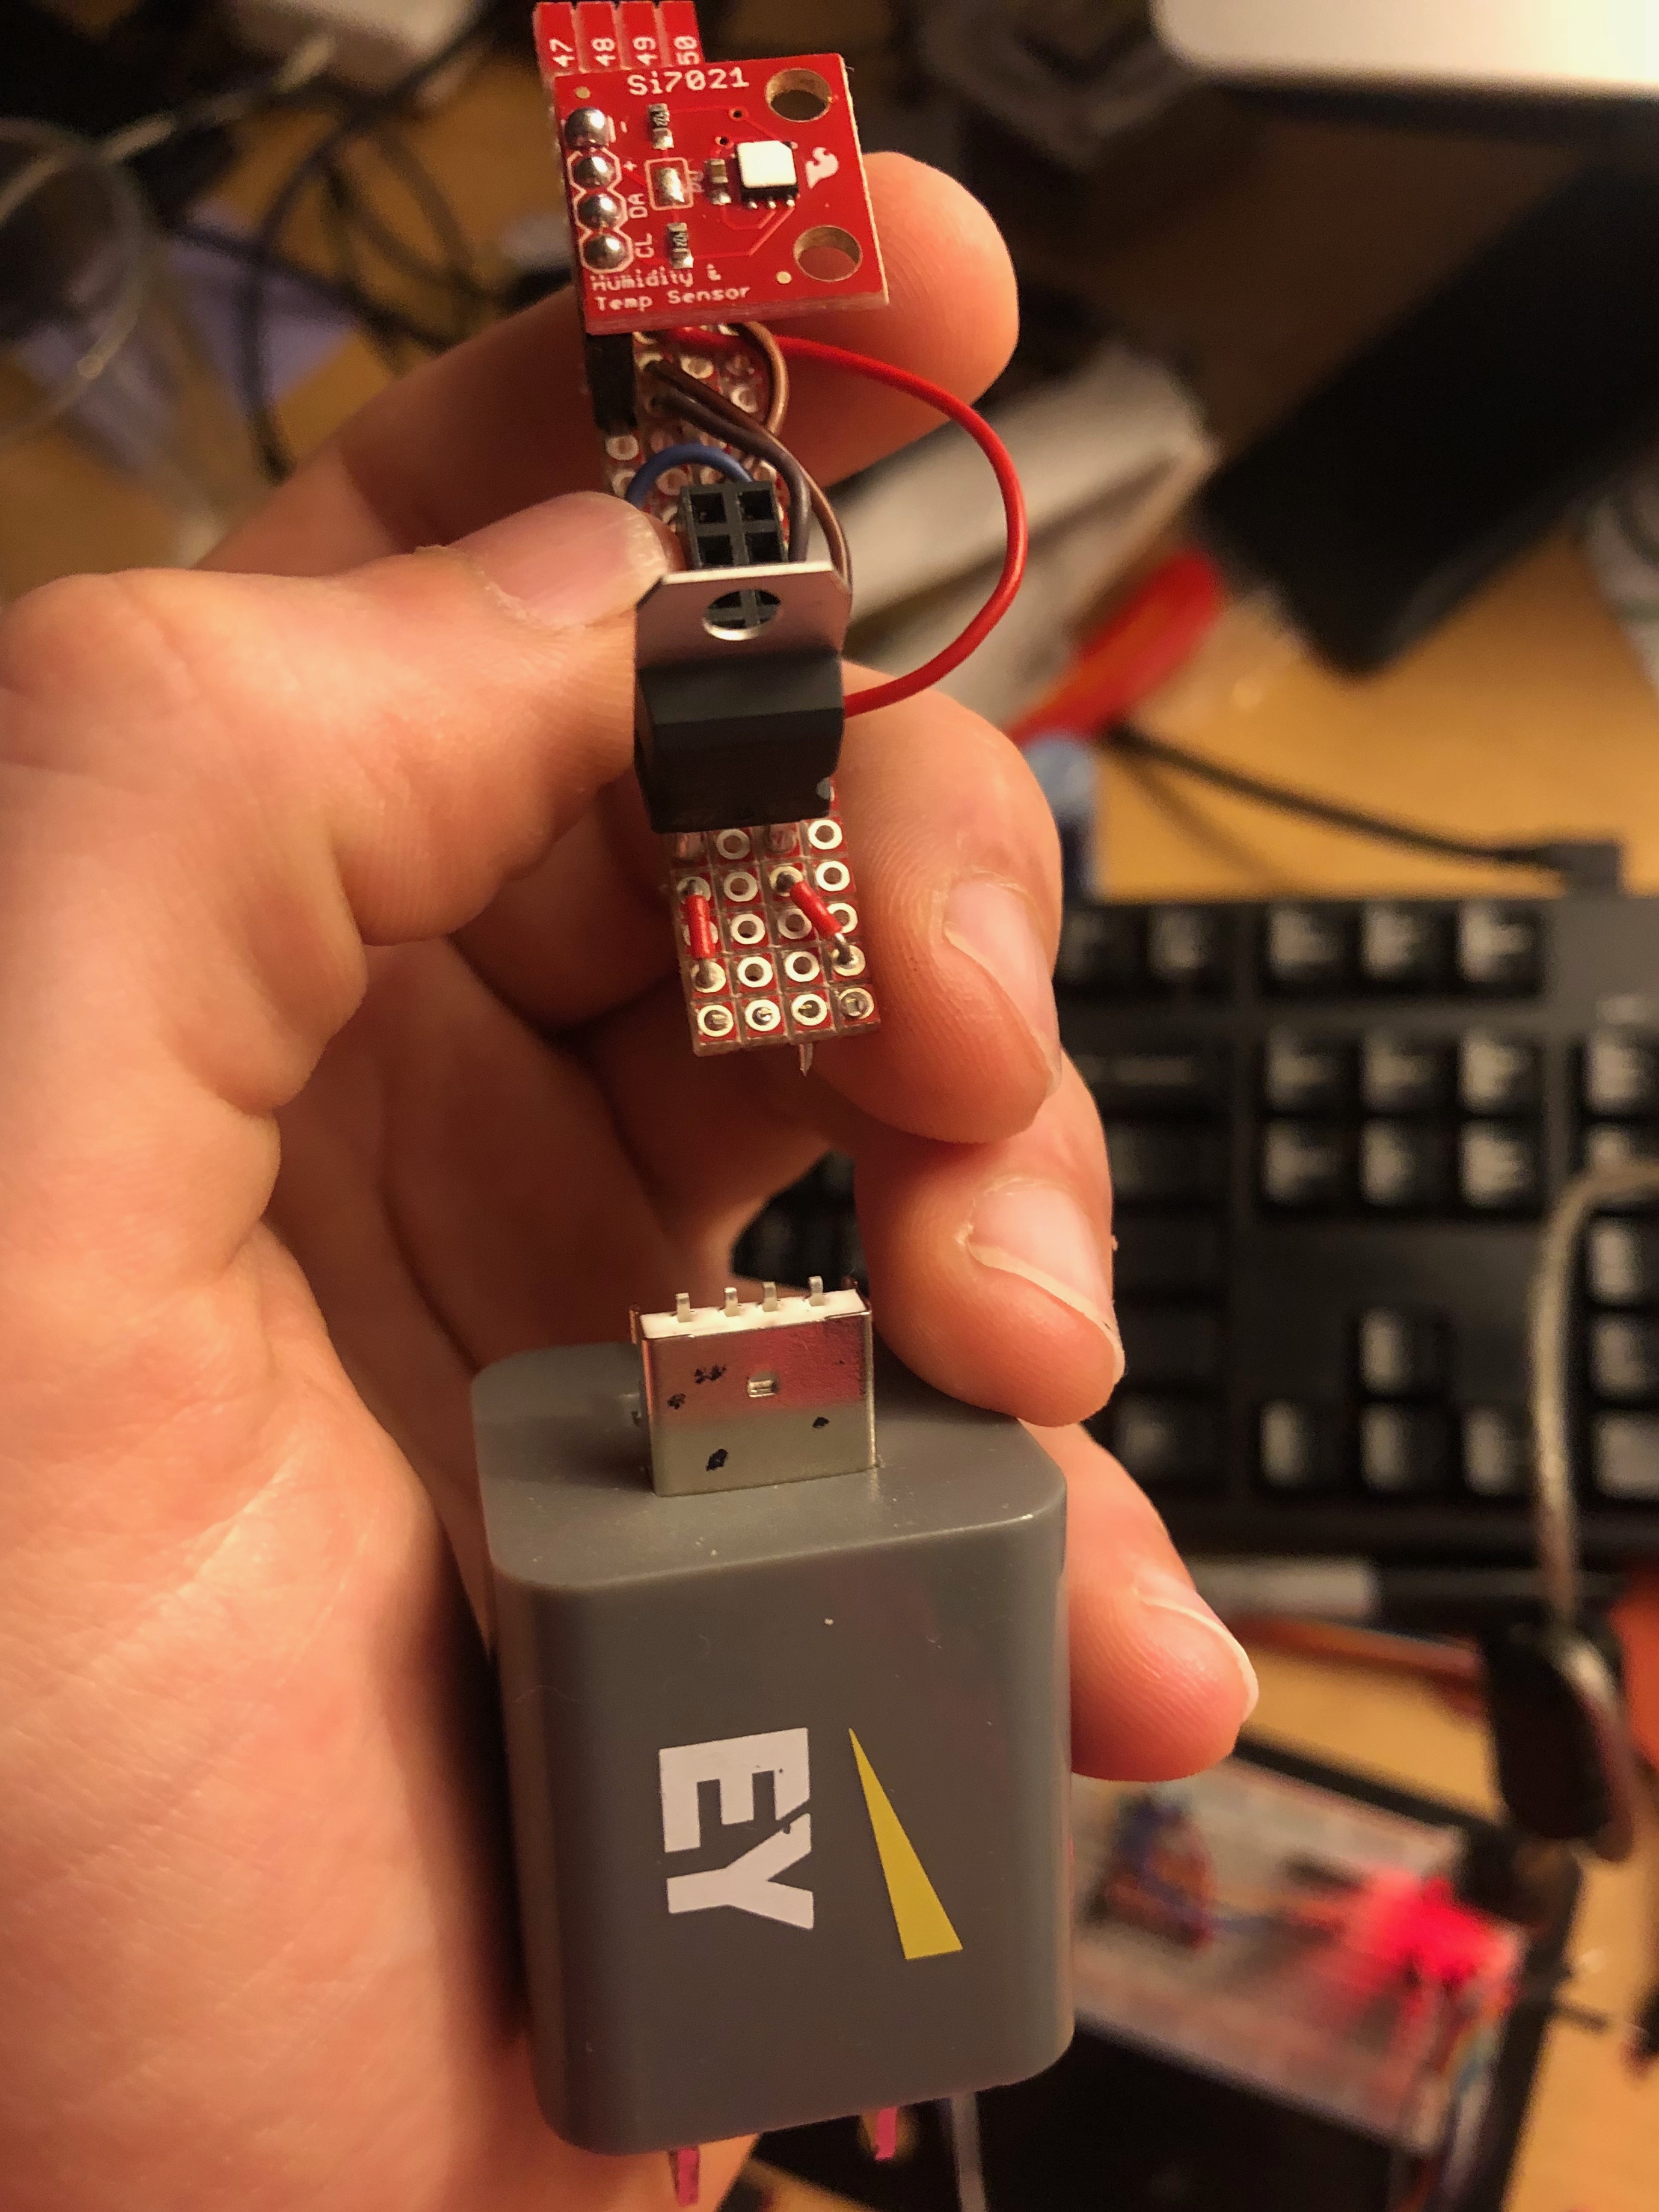 USB connector broken off of circuit board